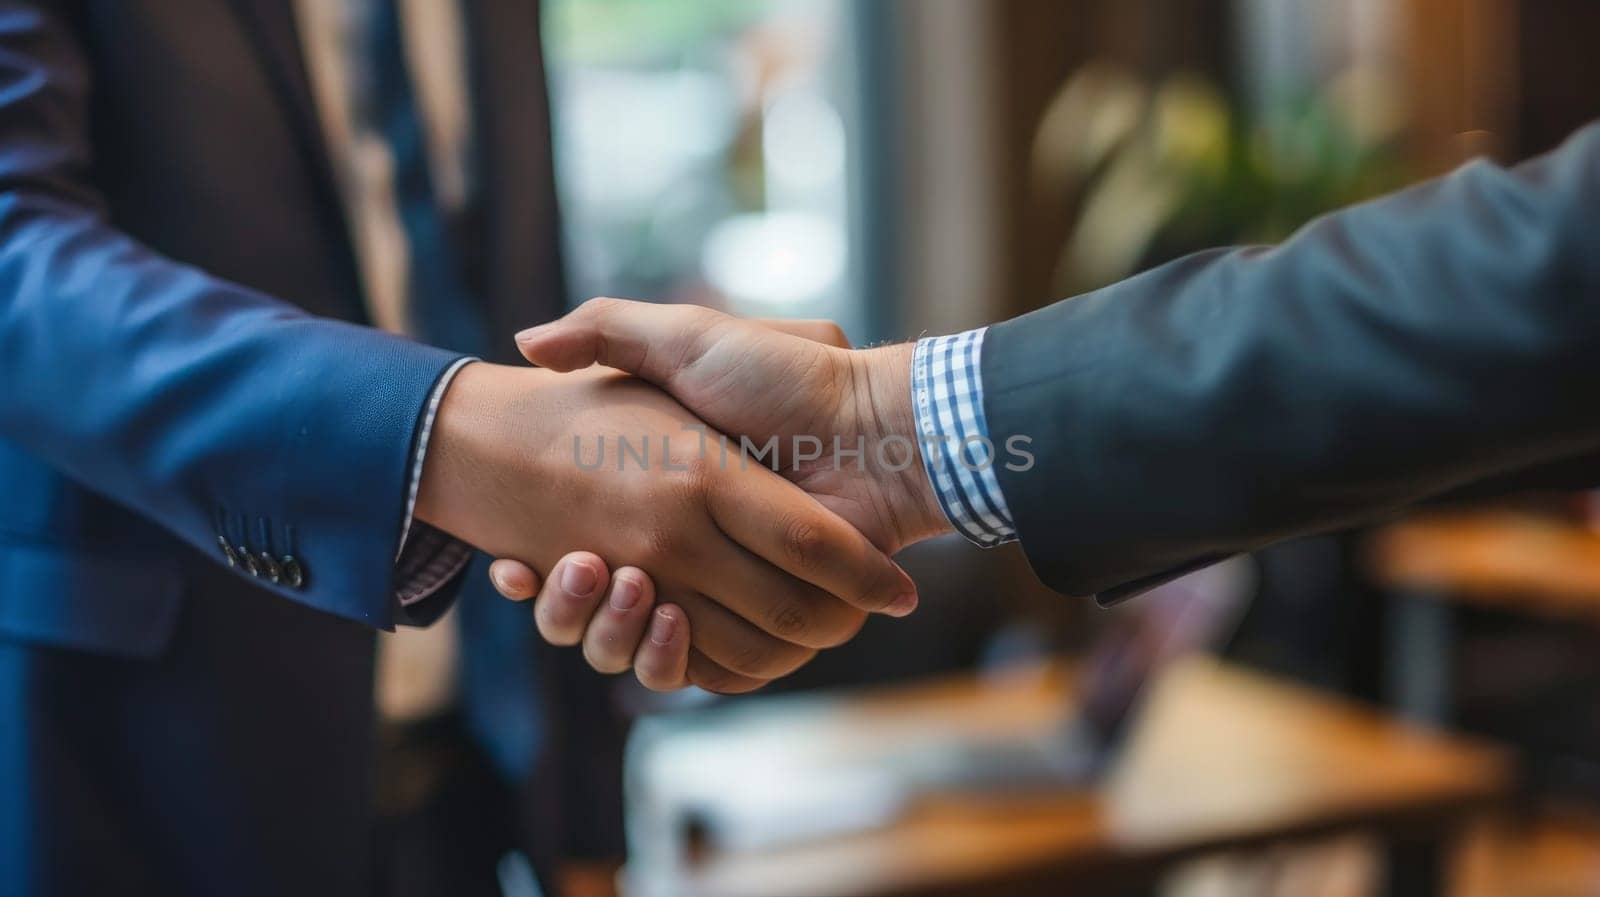 Man employer is shaking hands to congratulate the new employee after successful job interview, Job seeker by nijieimu